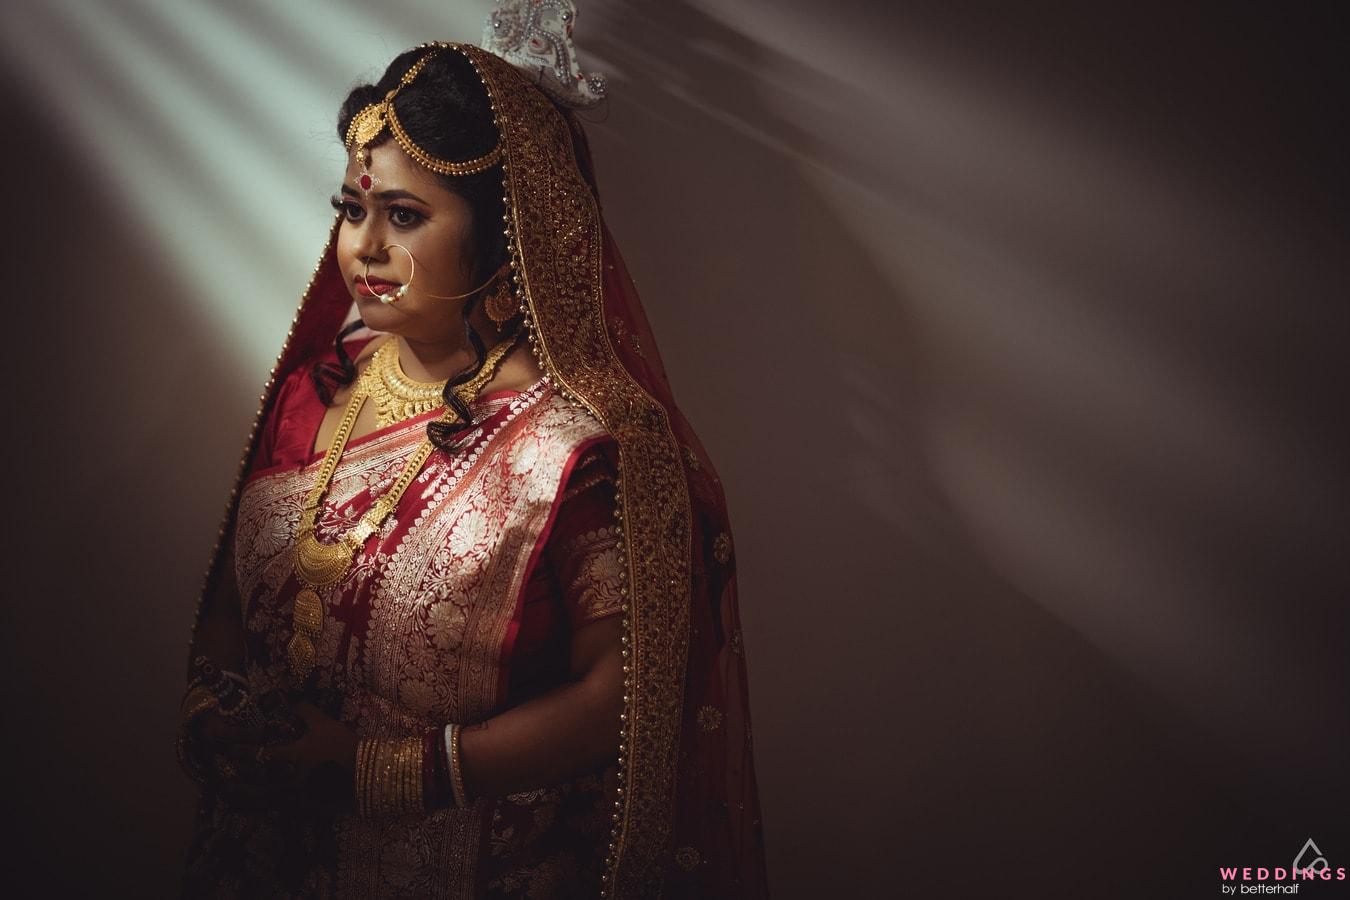 Top 25 Regal Bengali Brides Giving us Divine Looks! | WeddingBazaar